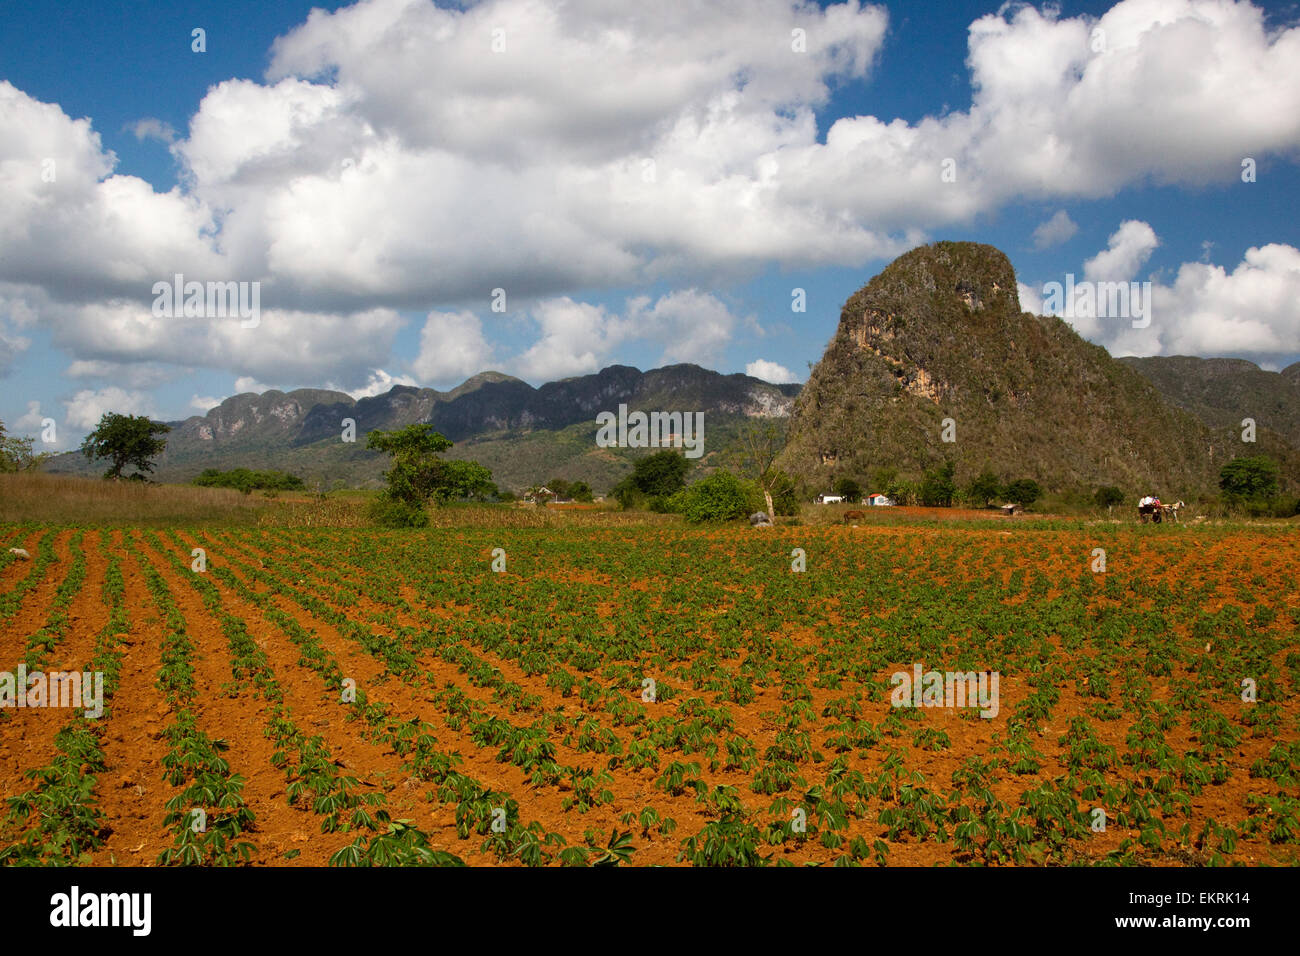 Les terres agricoles de Vinales, Cuba avec les cultures et les plantations de tabac Banque D'Images